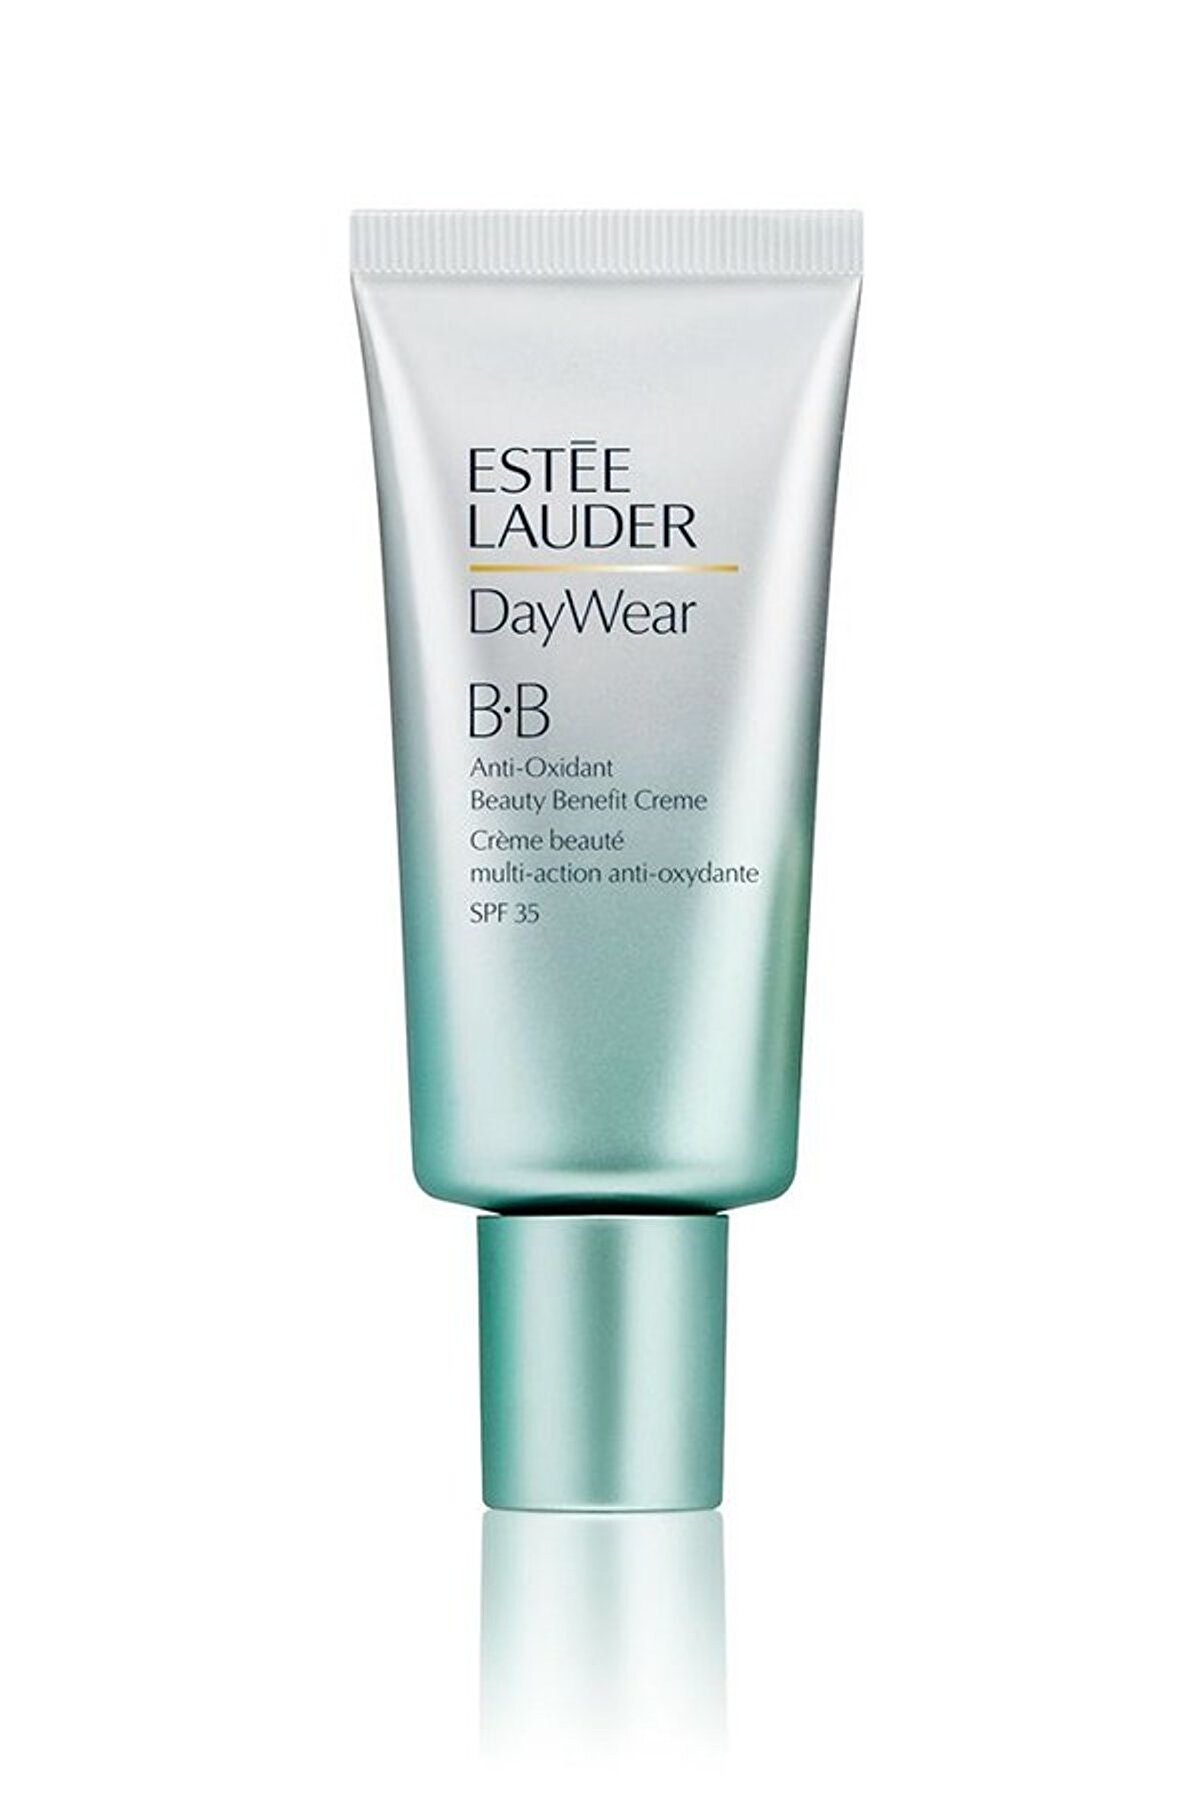 Estee Lauder Yaşlanma Karşıtı BB Krem - Anti-Oxidant Beauty Benefit Creme SPF 35 Light Medium 30 ml 887167082427